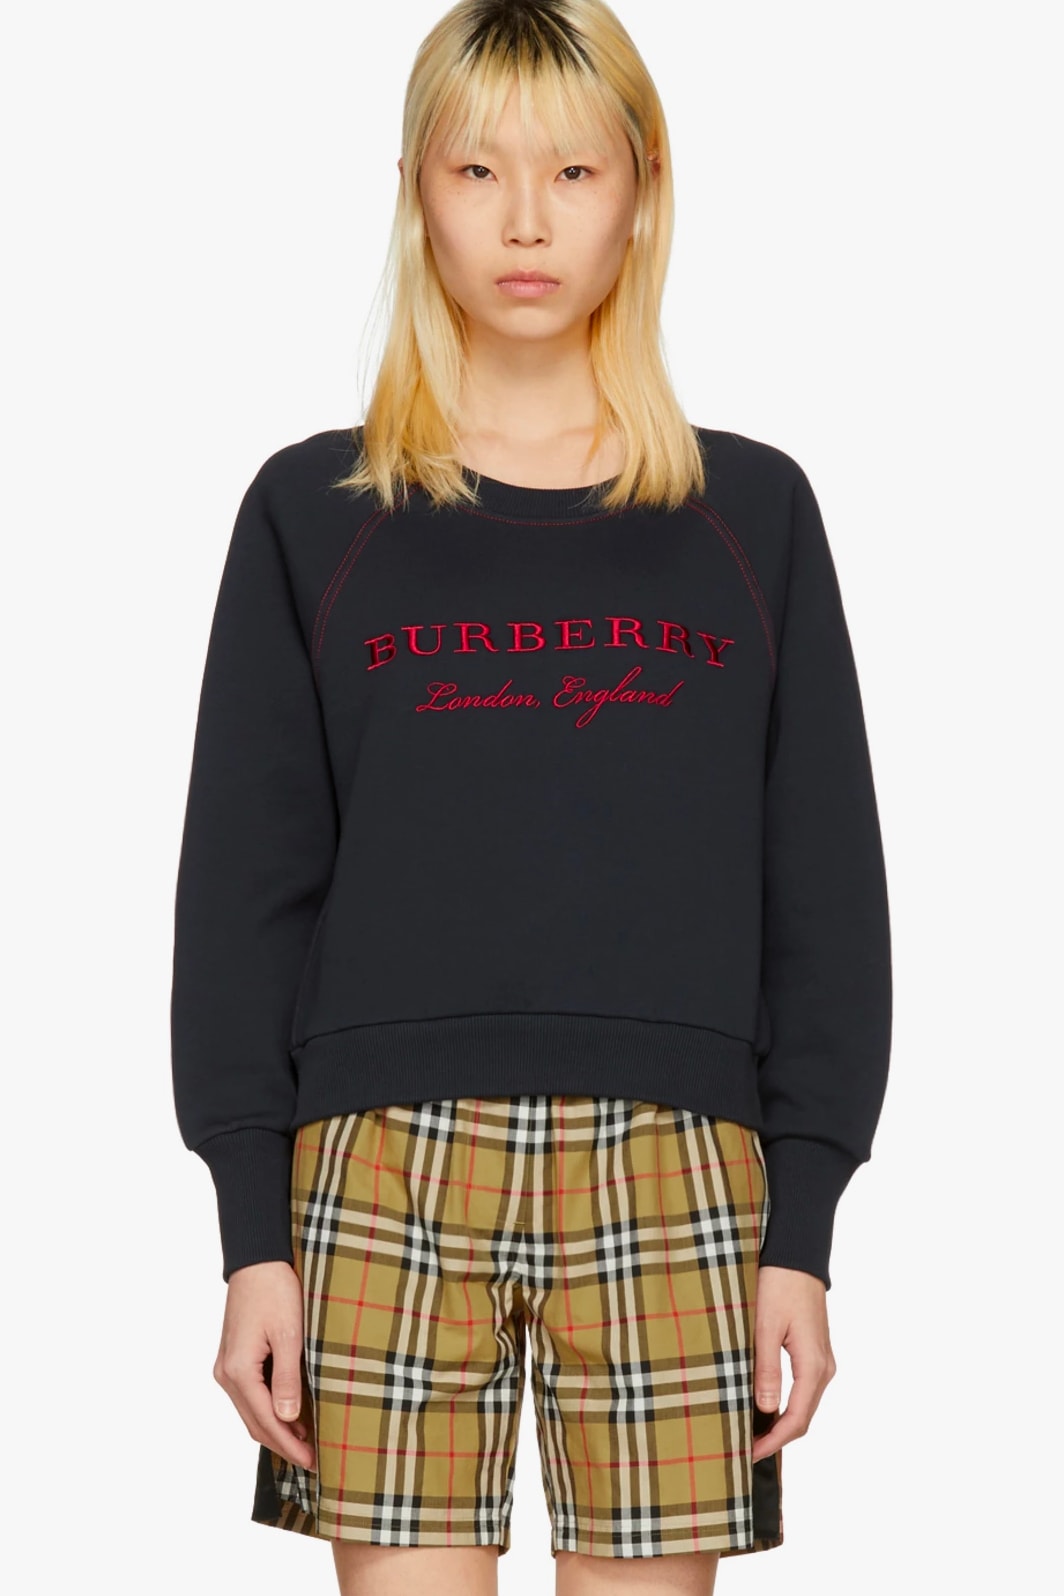 Burberry Navy Blue Sweater Crewneck Sweatshirt Red SSENSE Sale